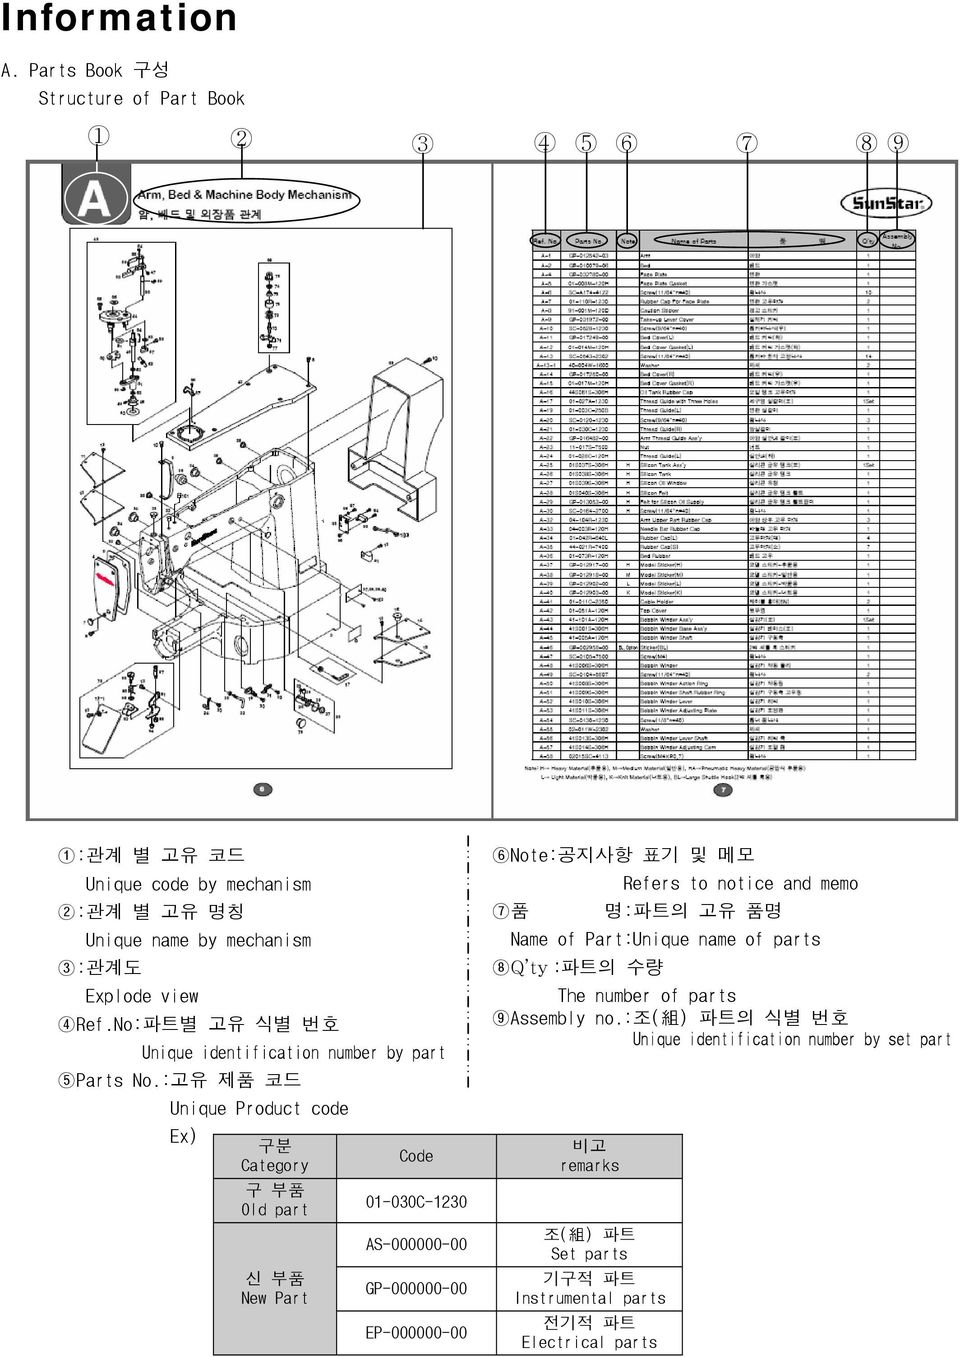 No:파트별 고유 식별 번호 Unique identification number by part 5Parts No.